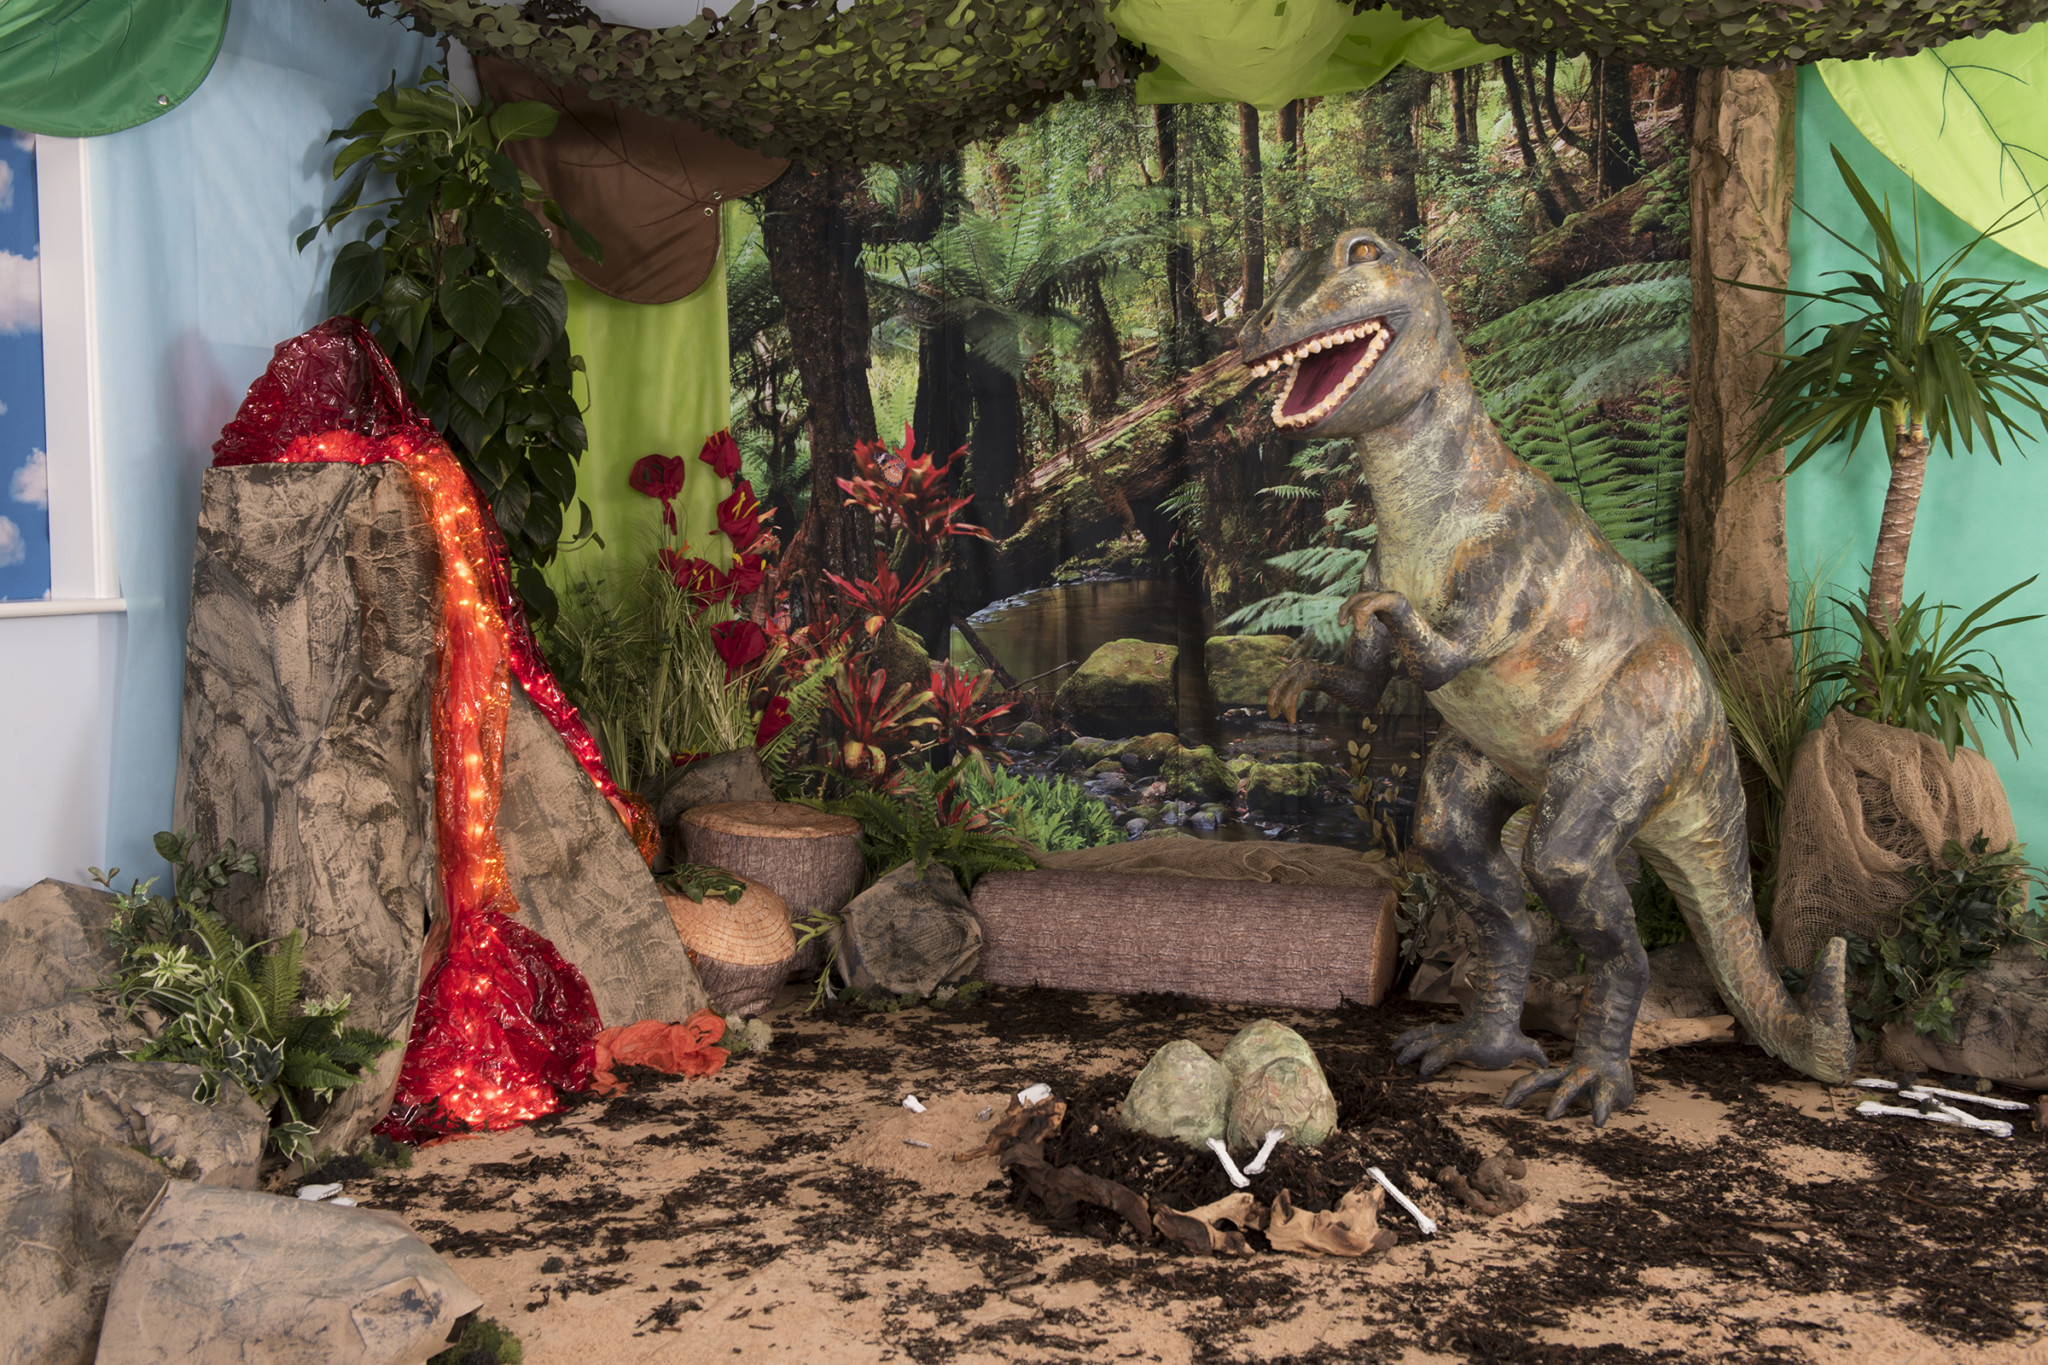 Dinosaur immersive environment